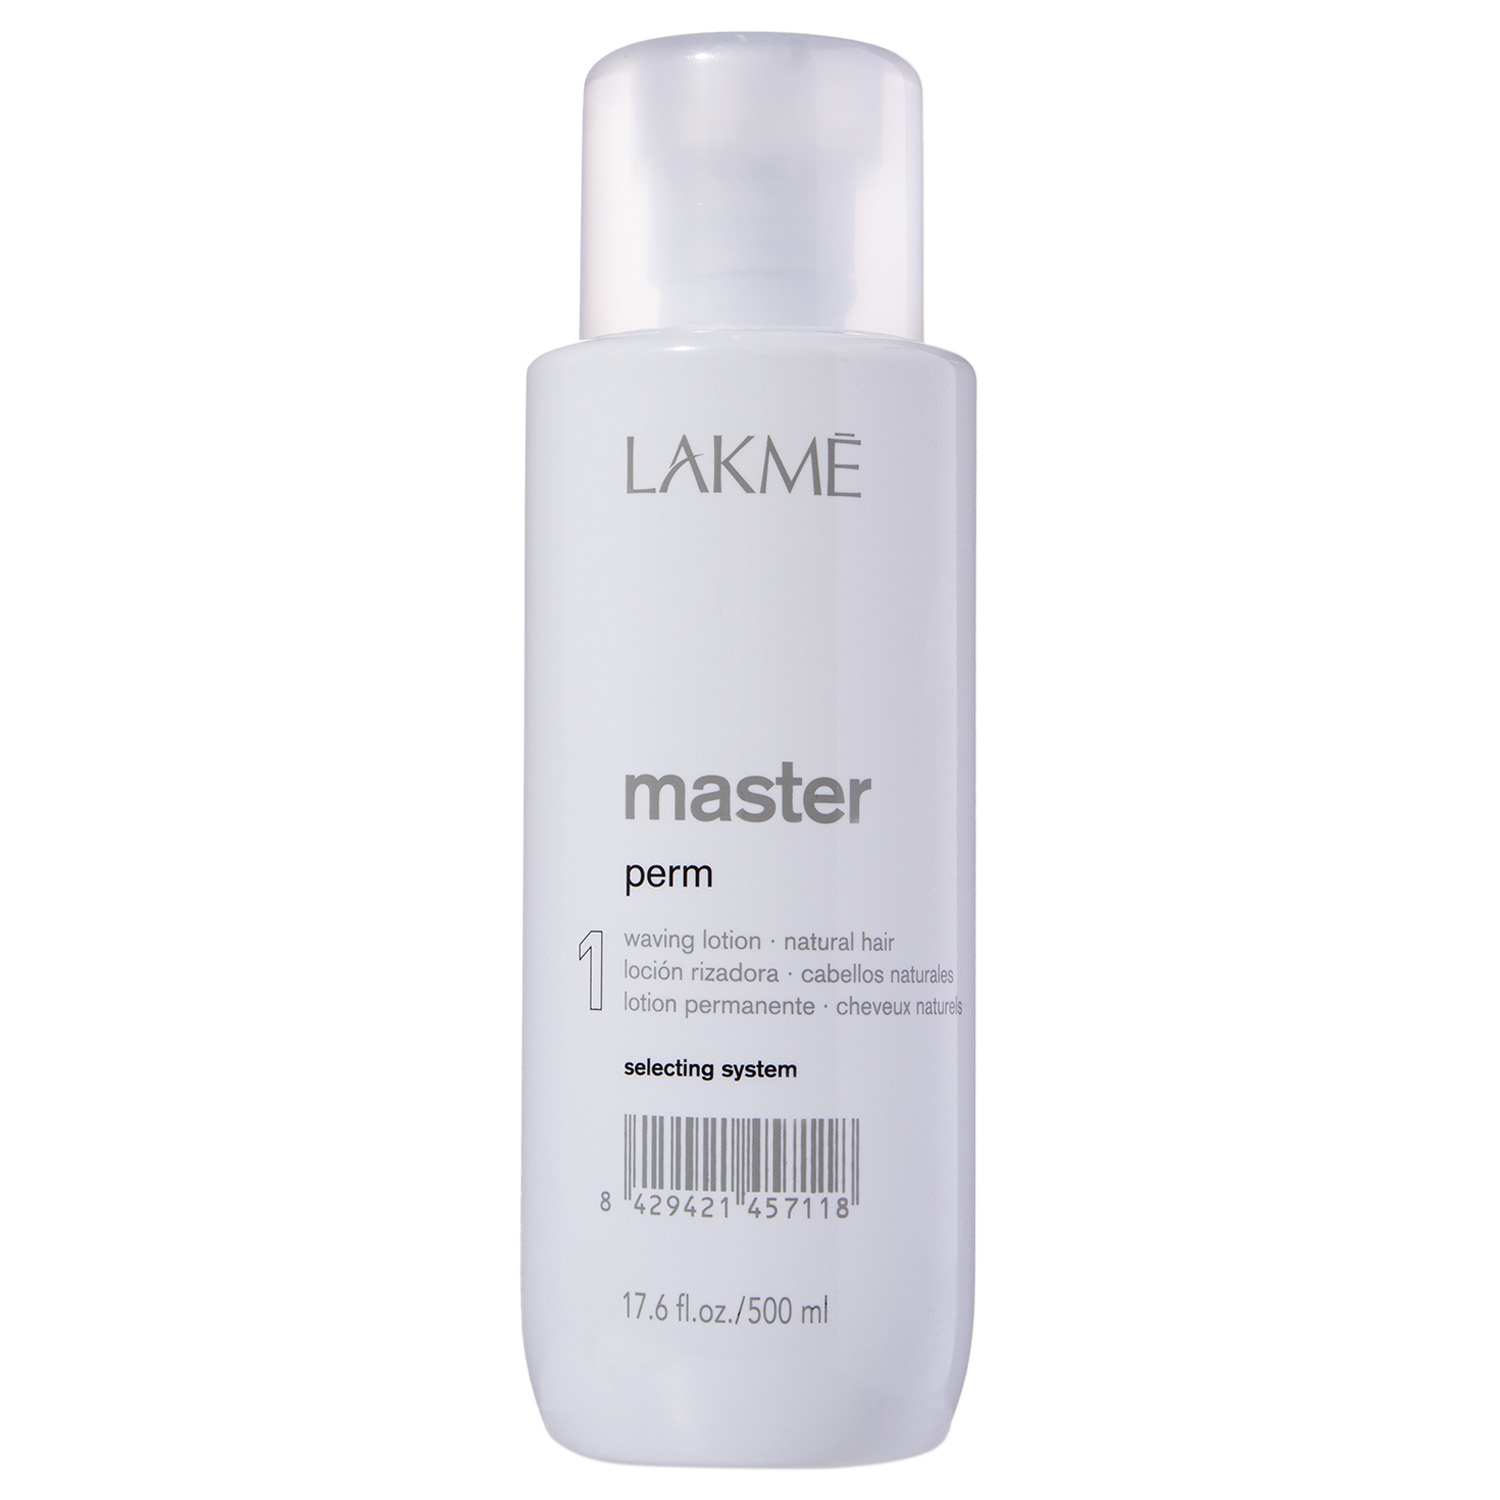 Lakme Лосьон для завивки нормальных волос 1 Perm Waving Lotion 1, 500 мл (Lakme, Master) hipertin лосьон для химической завивки волос жестких perming lotion 0 500 мл